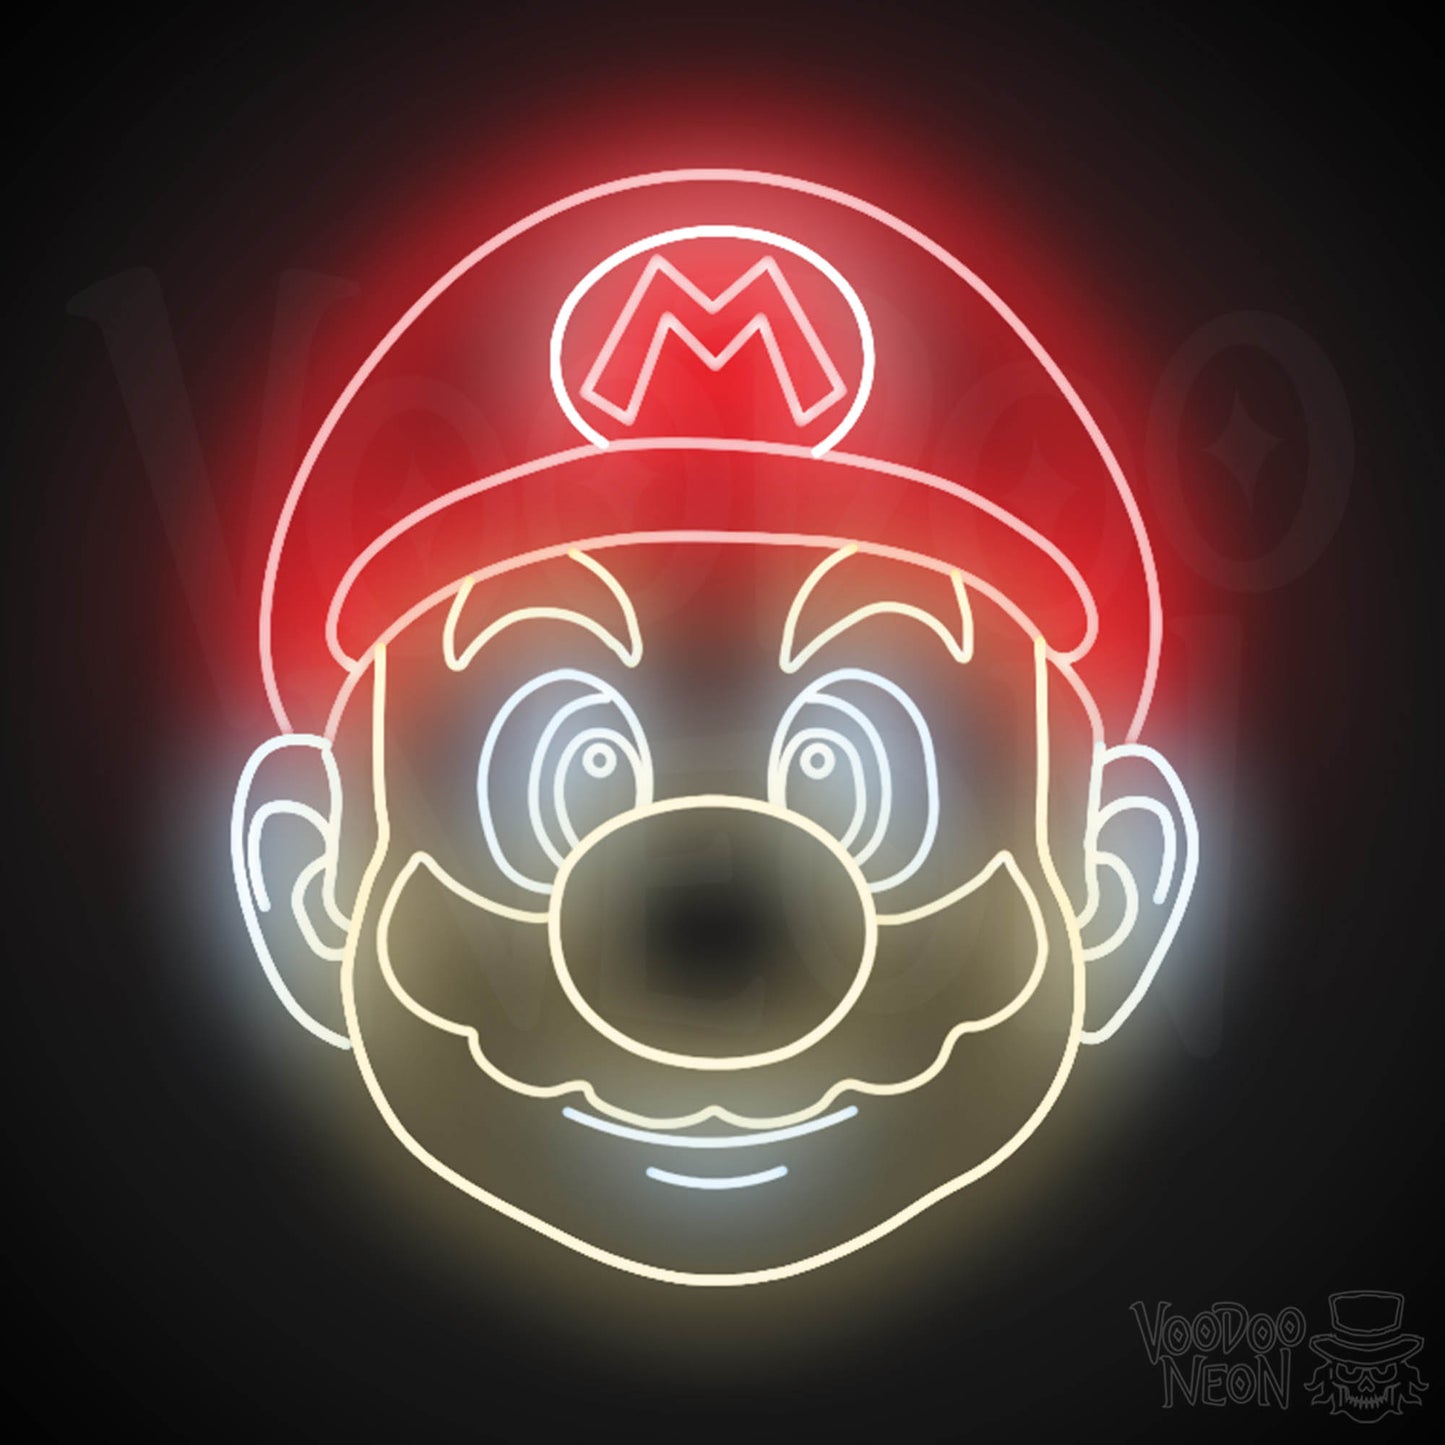 Mario Neon Sign - Mario Sign - Mario Wall Art - LED Neon Wall Art - Color Multi-Color